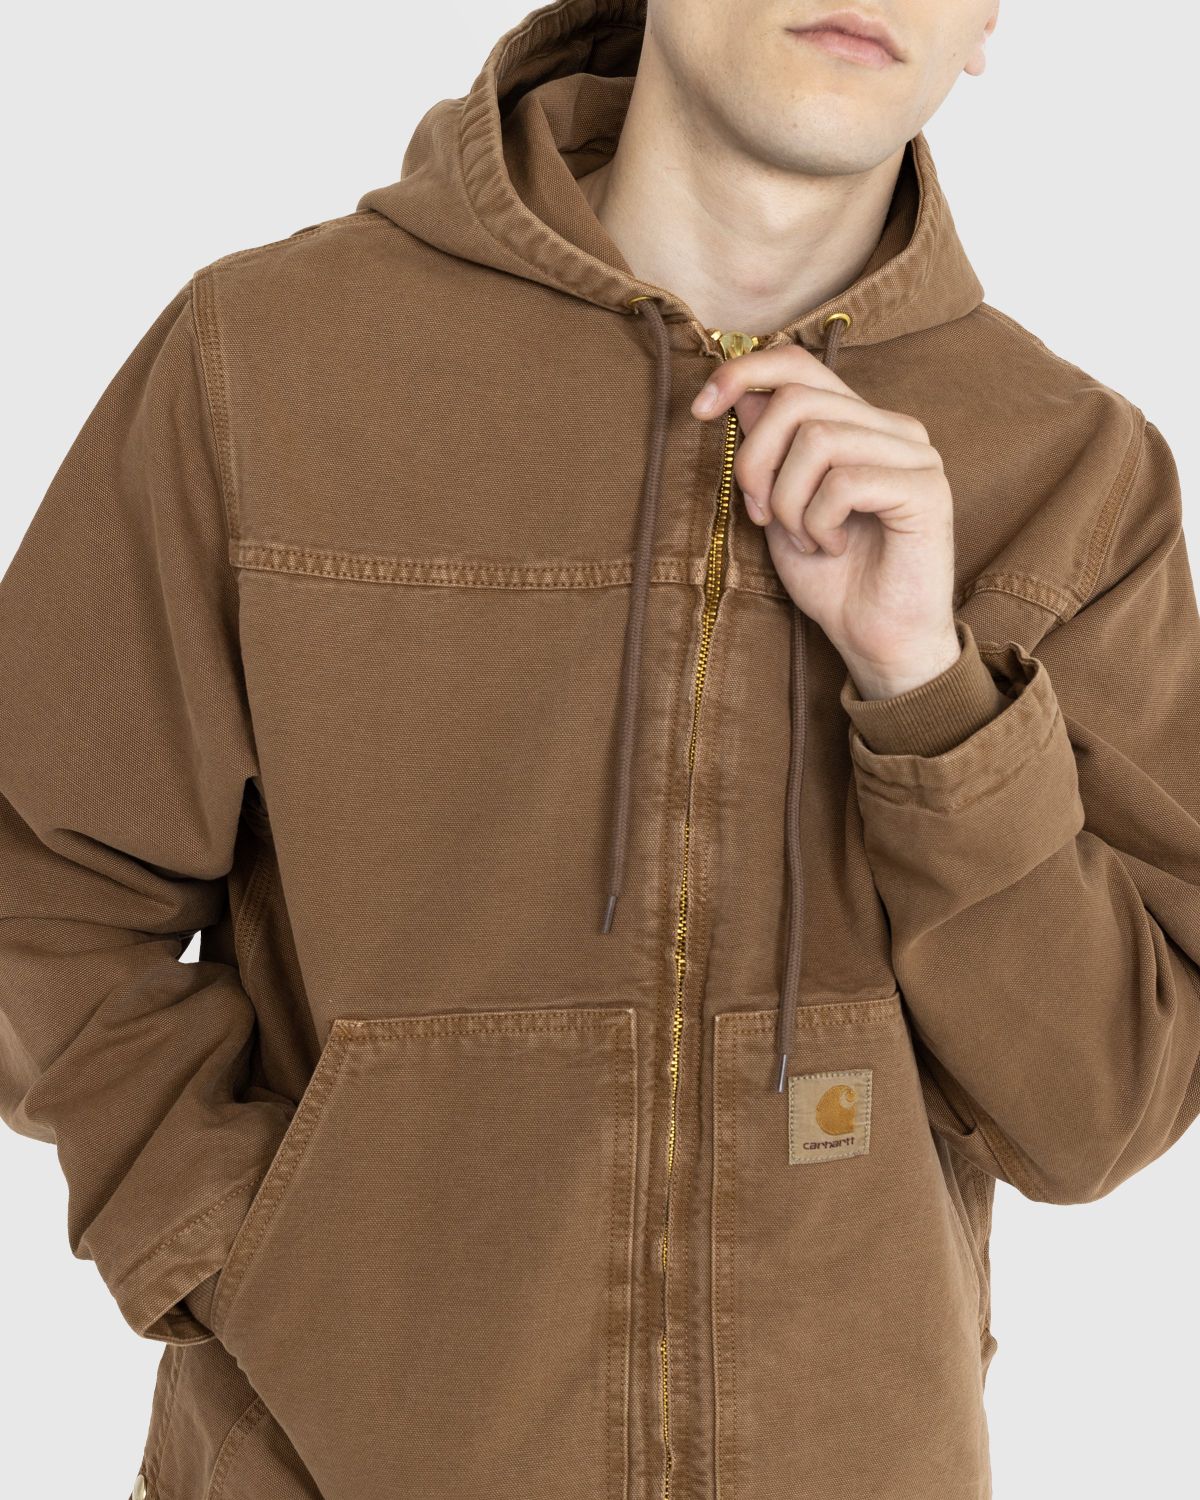 Carhartt WIP – Arling Jacket Faded Tamarind | Highsnobiety Shop